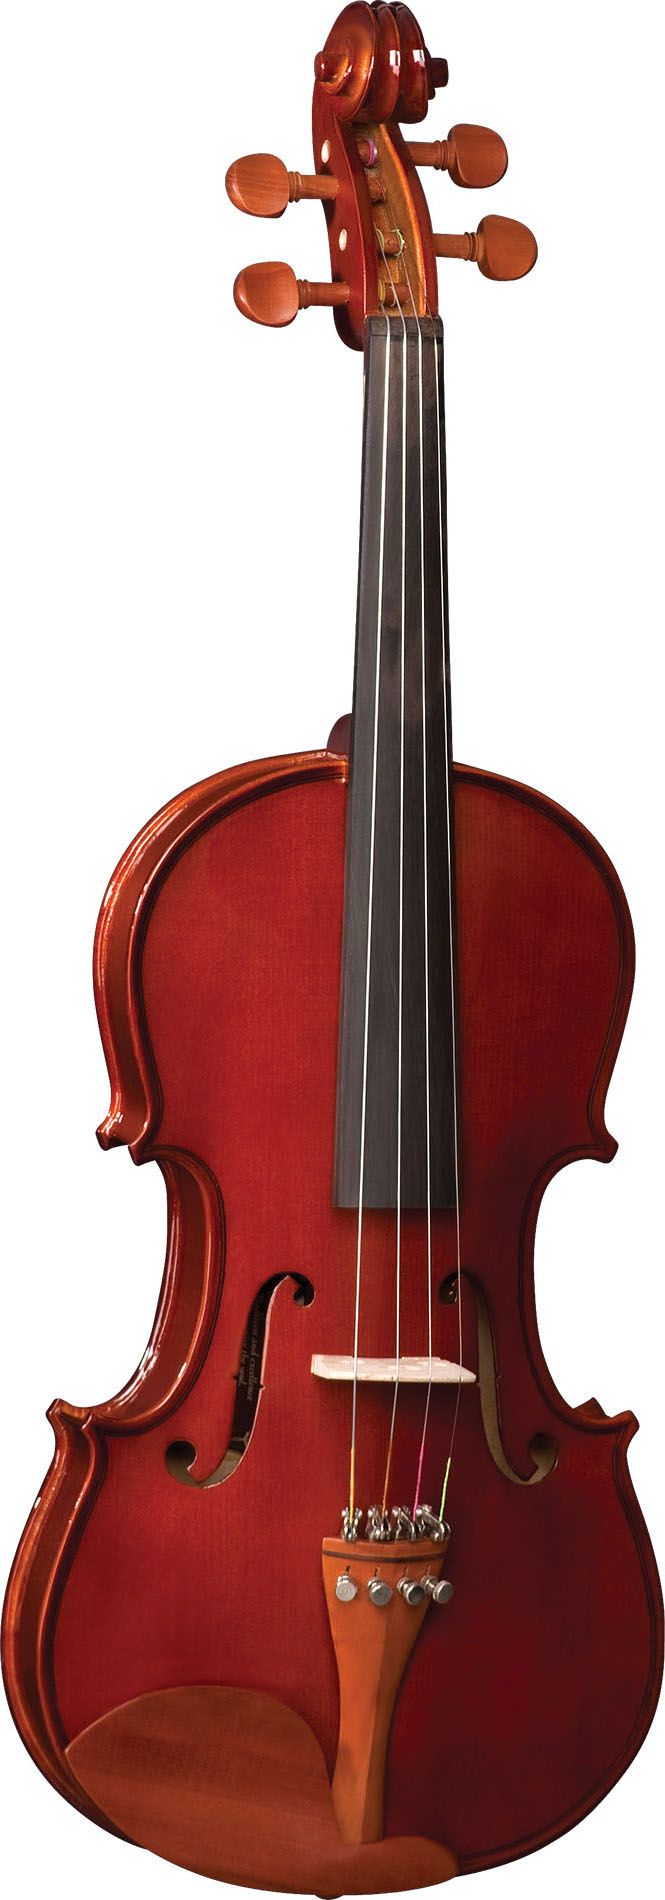 Violino EAGLE 4/4 Classic Series VE441 Envernizado